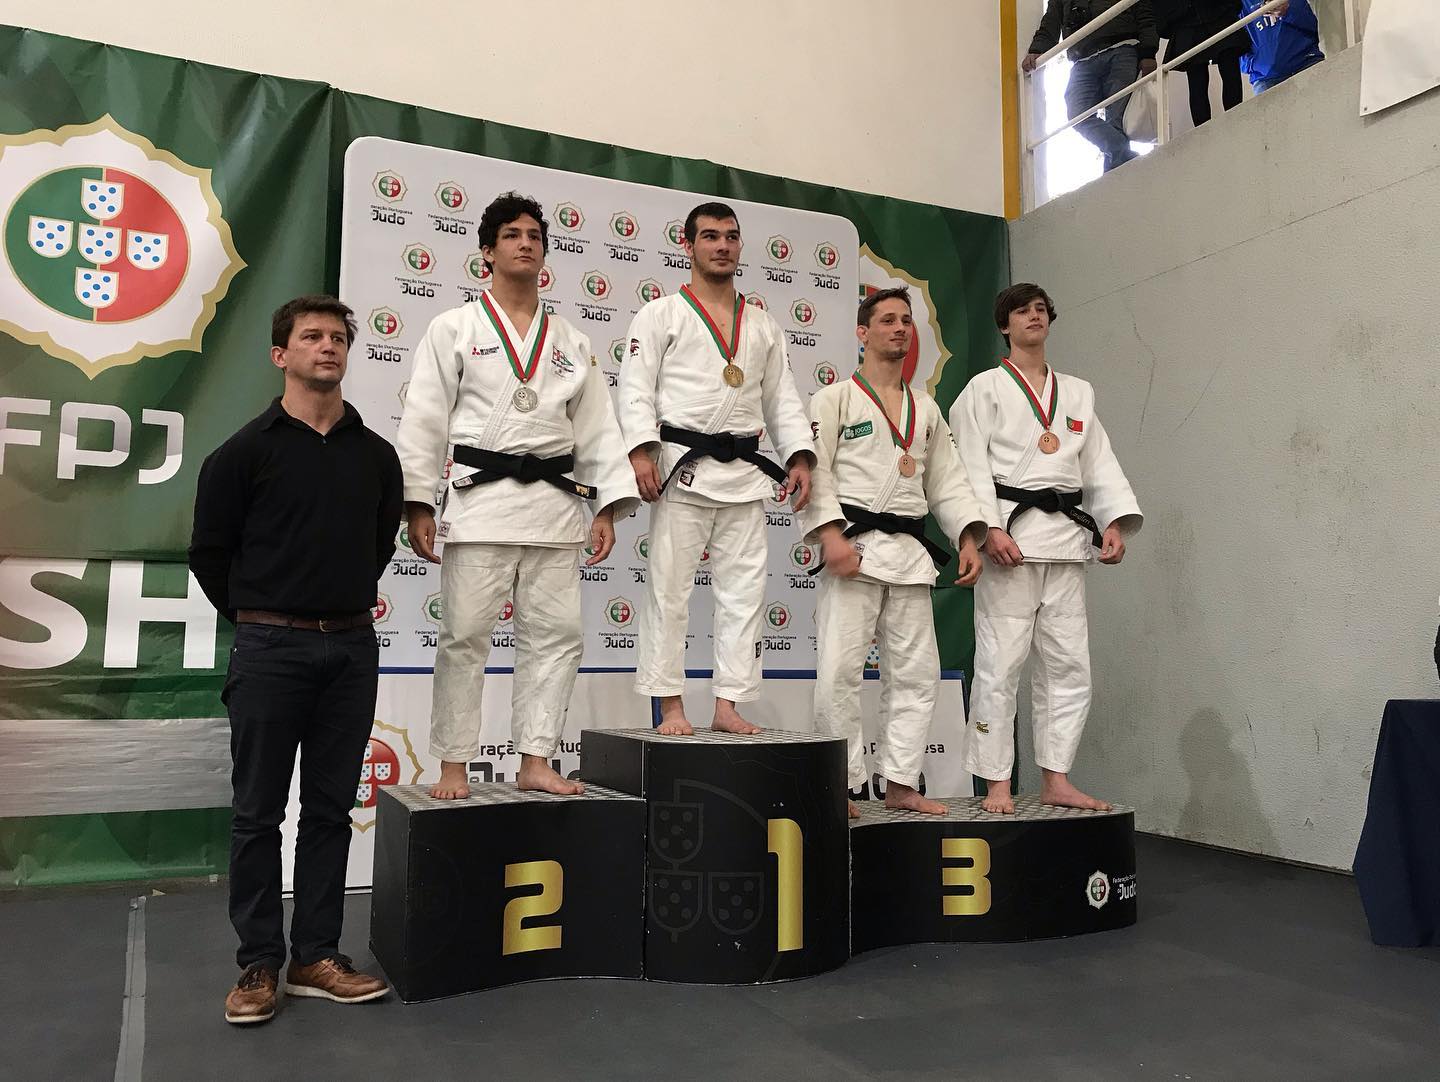 Judoca Nuno Martins sagra-se Campeão Nacional de Juniores